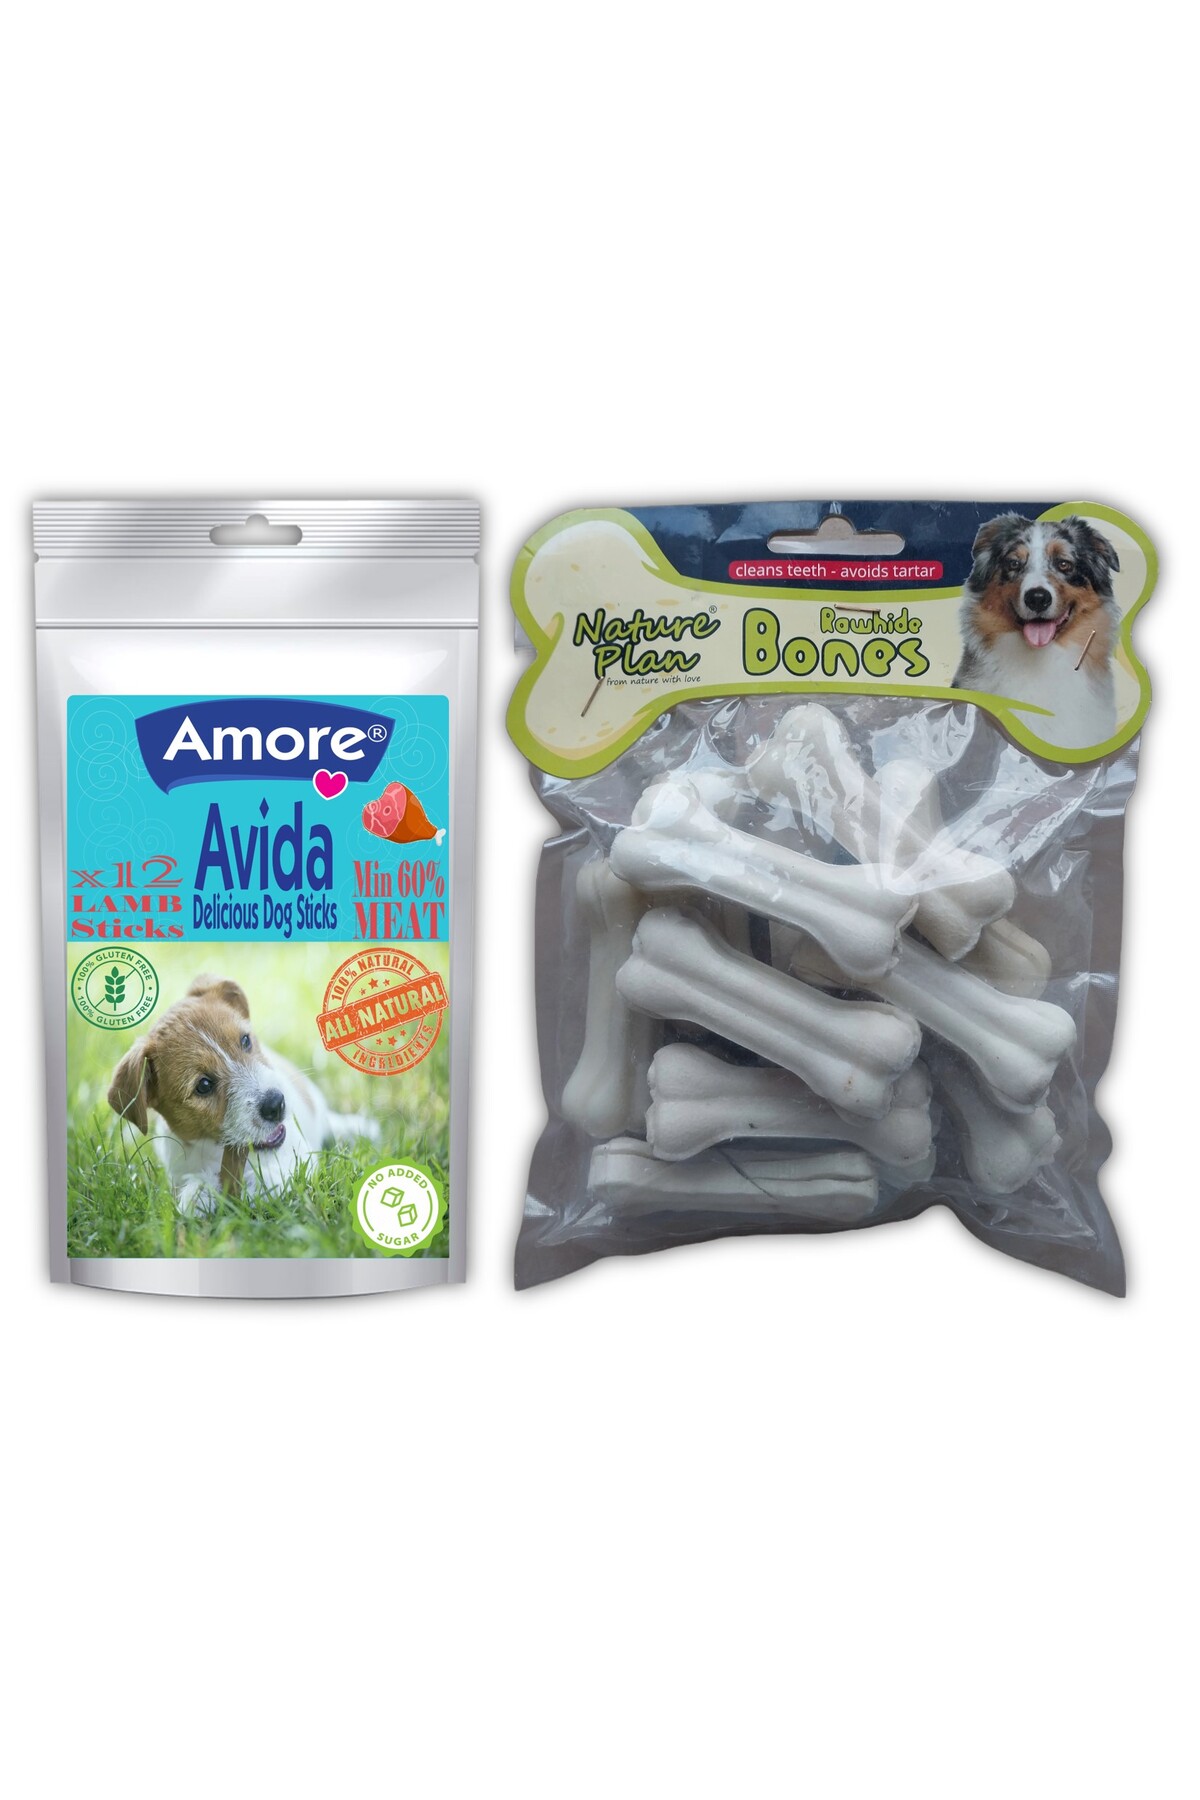 Amoredog Avida 12li Kuzu Etli Tahilsiz Sticks, 7.5cm 12li Press Beyaz Kopek Odul Kemigi 320gr